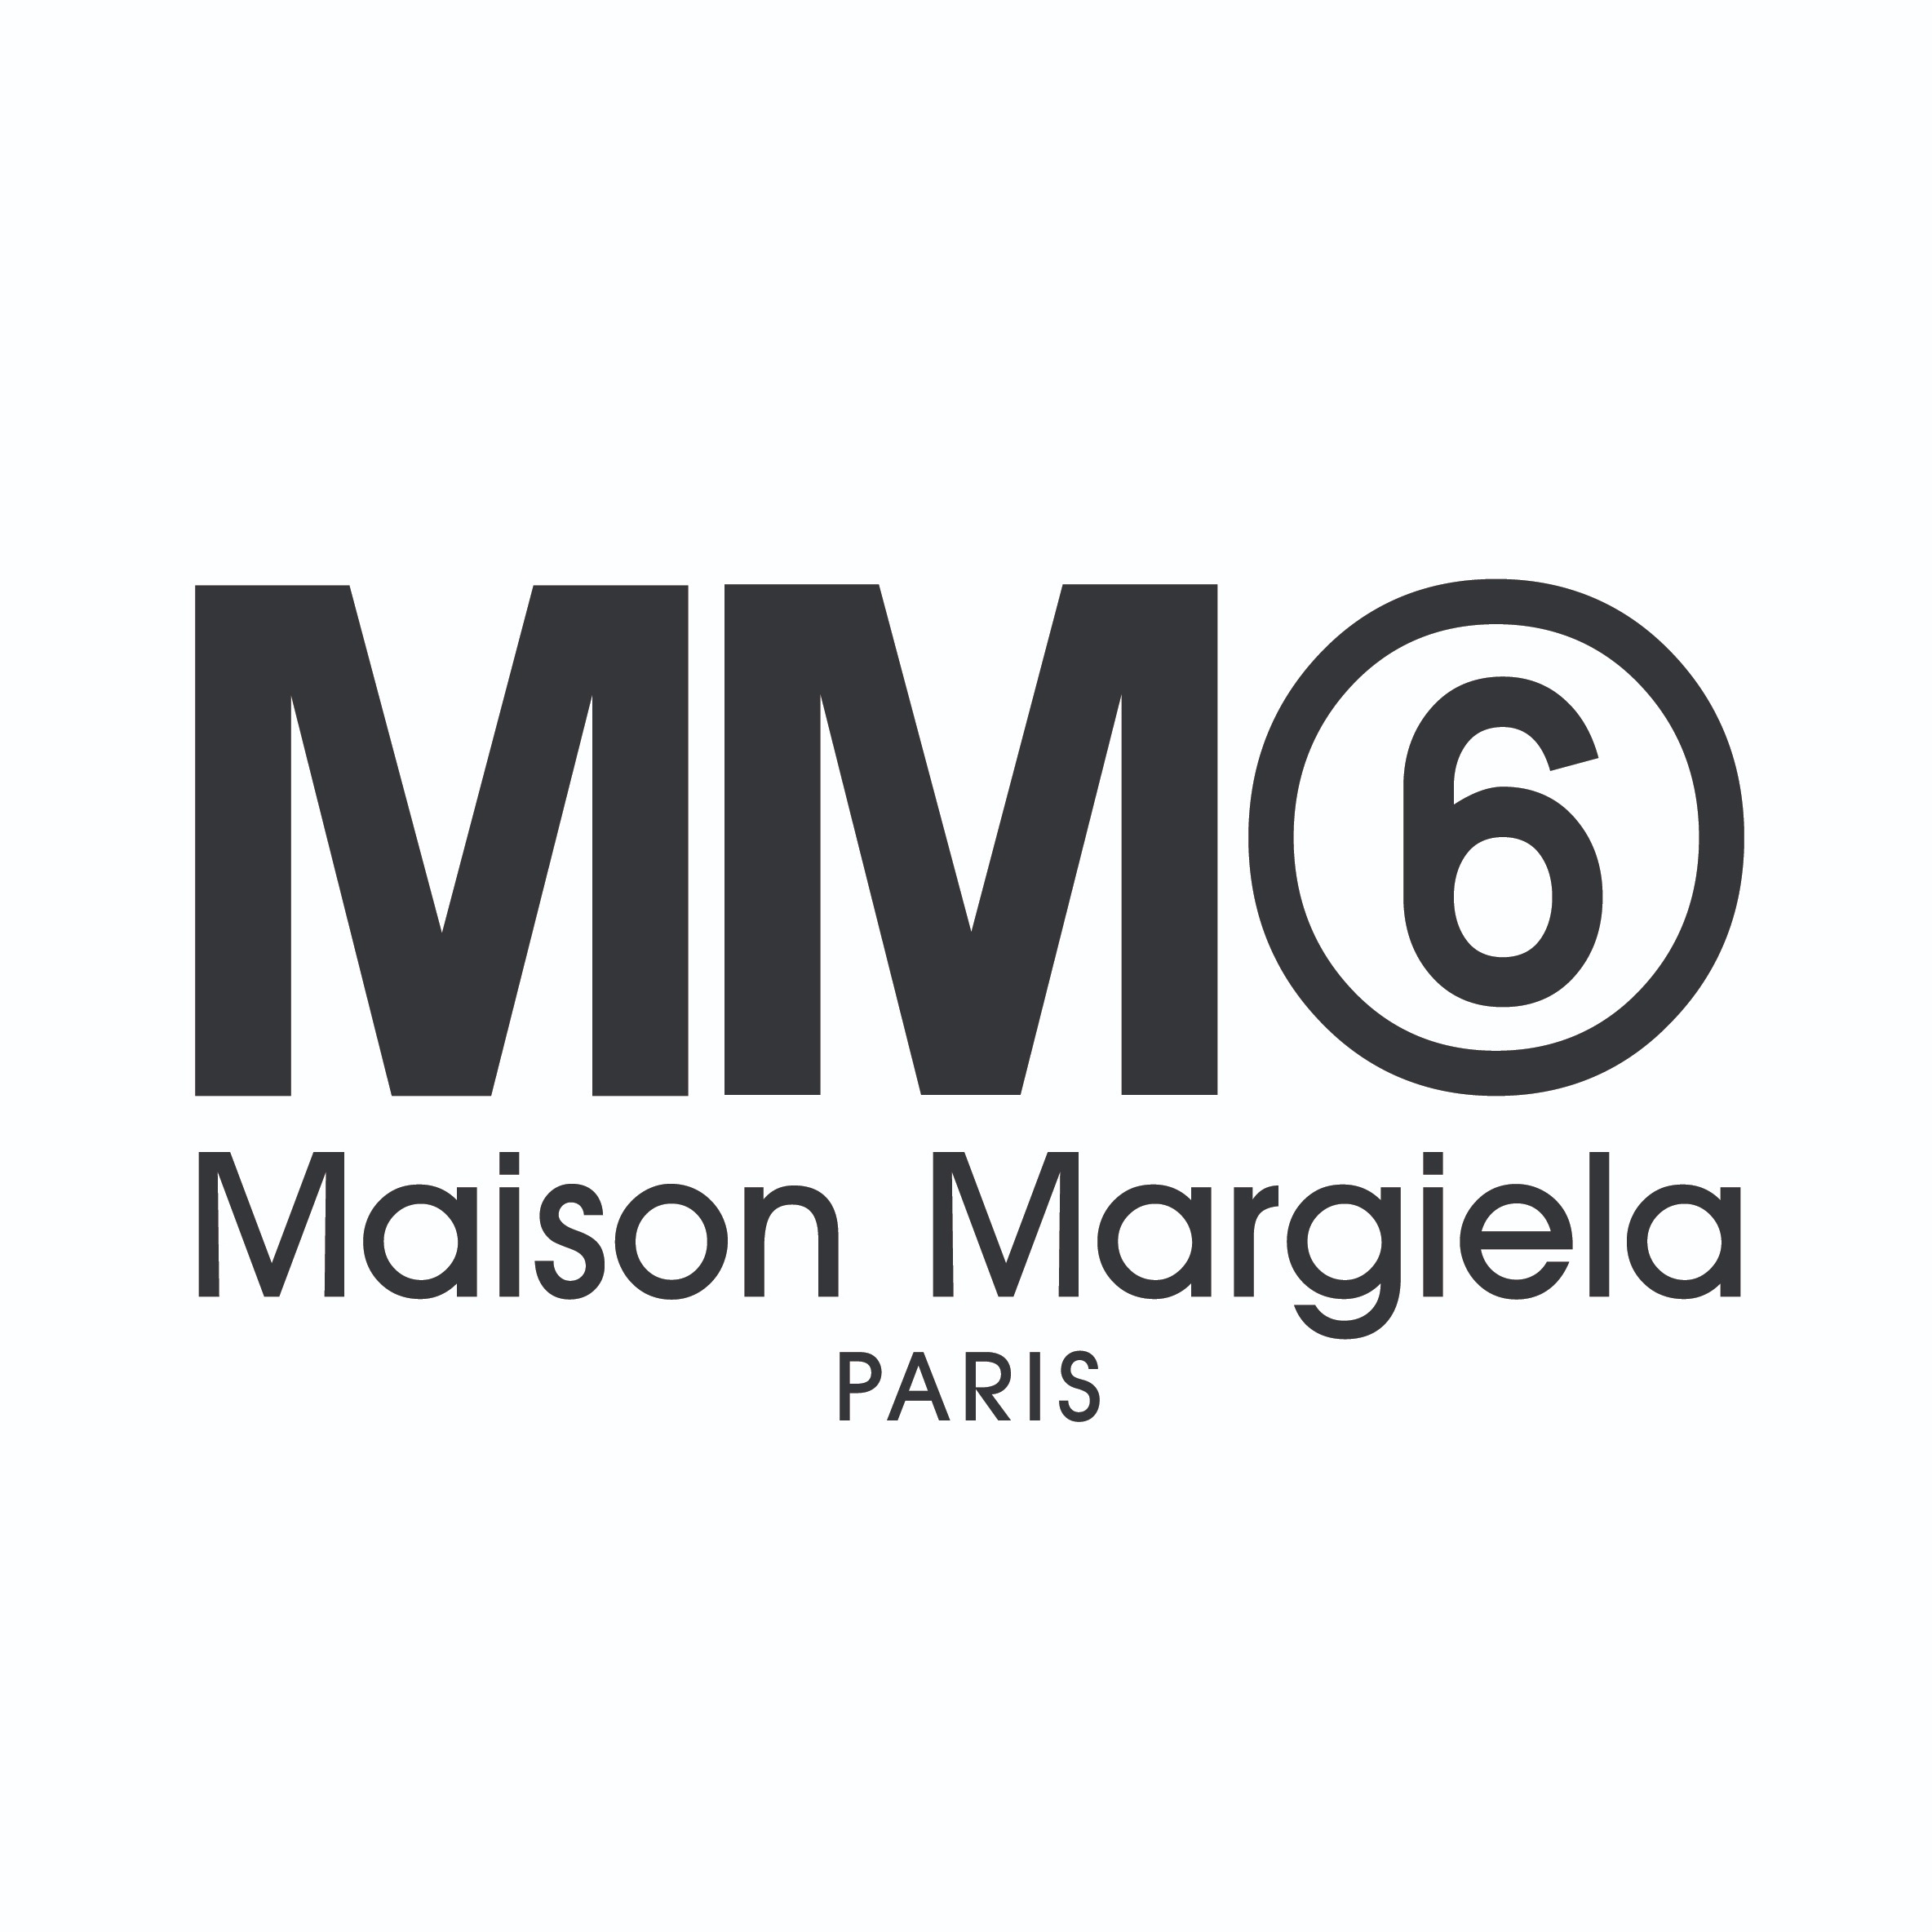 MM6 Maison Margiela Nagoya JR Takashimaya Logo